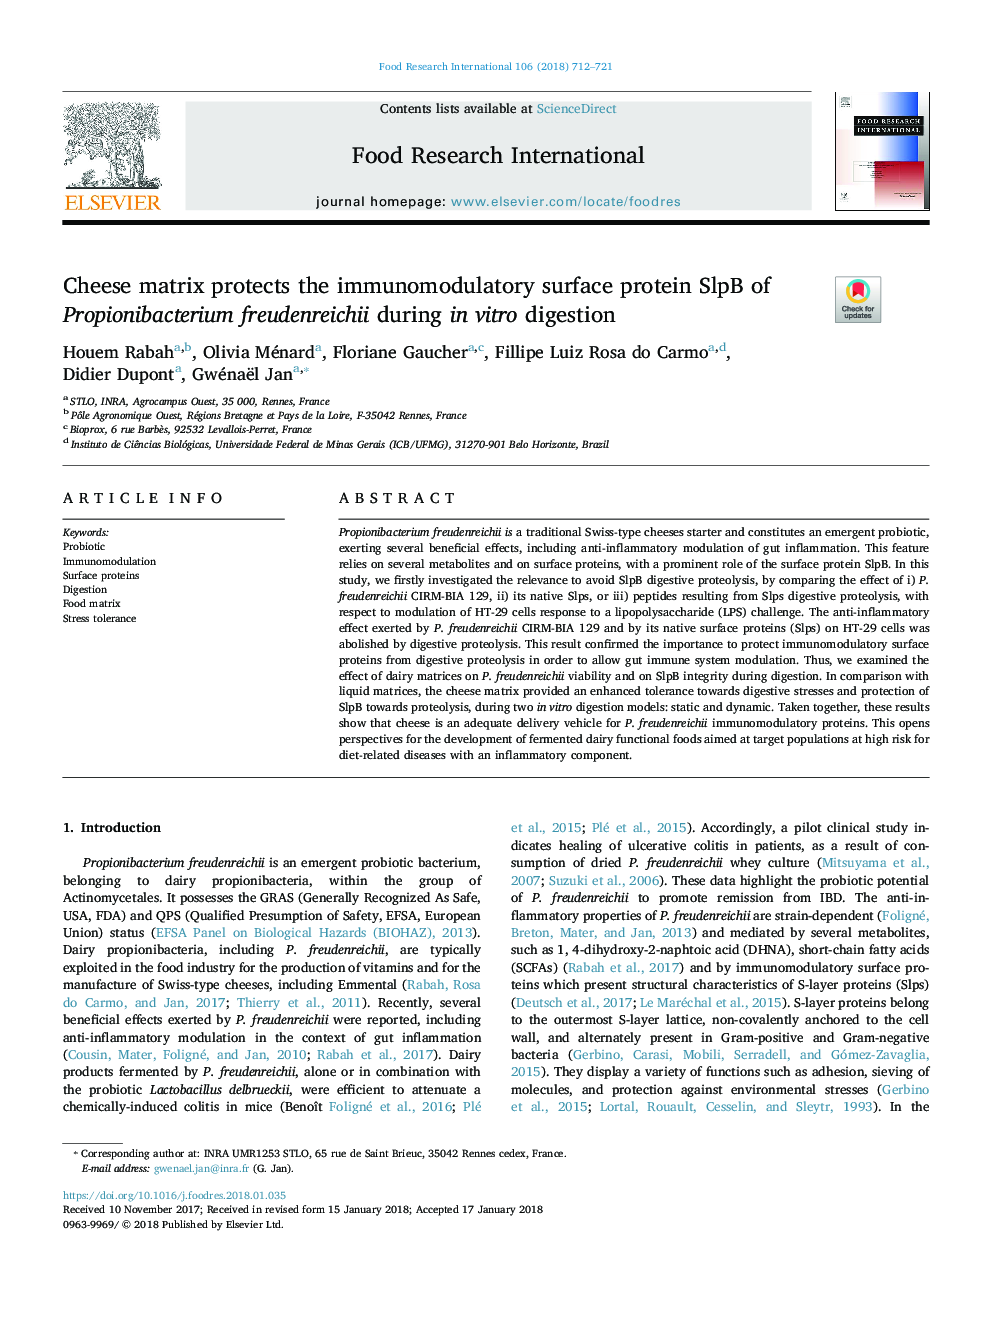 Cheese matrix protects the immunomodulatory surface protein SlpB of Propionibacterium freudenreichii during in vitro digestion